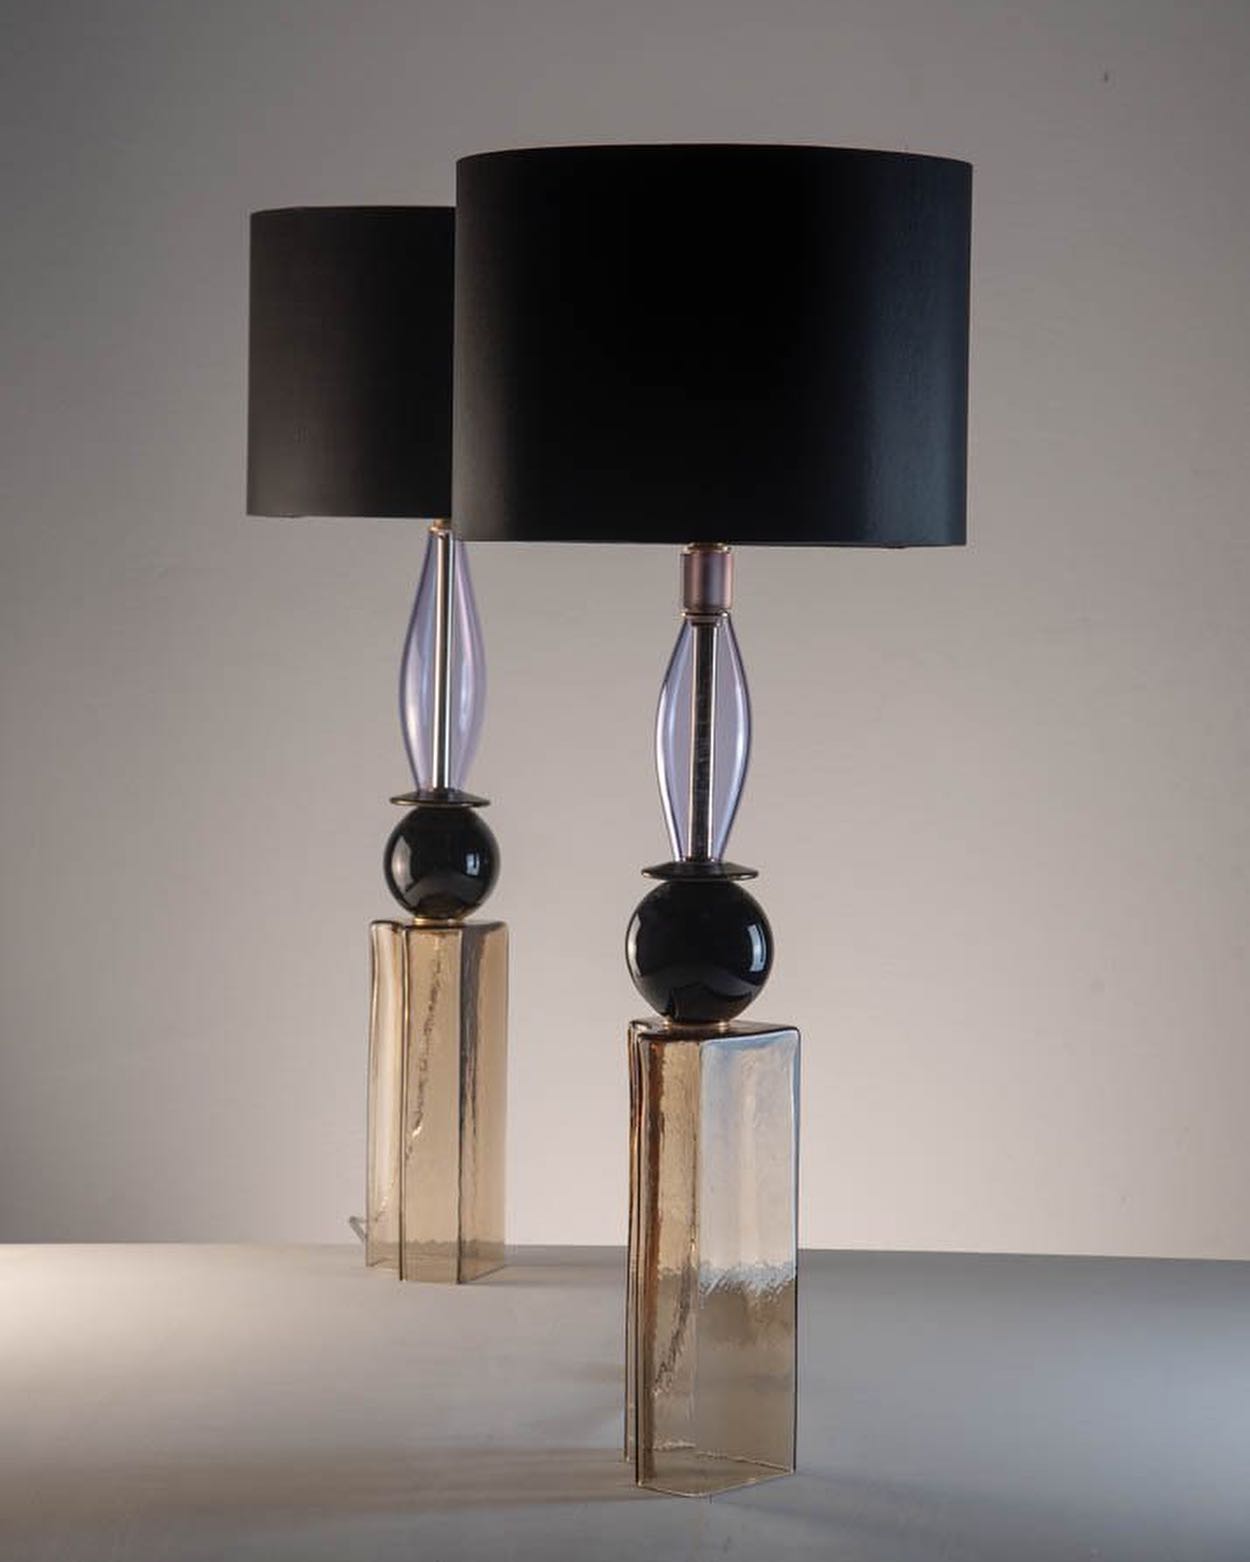 The Unique Sculptural Glass Lamps Of Silvia Finiels (18)